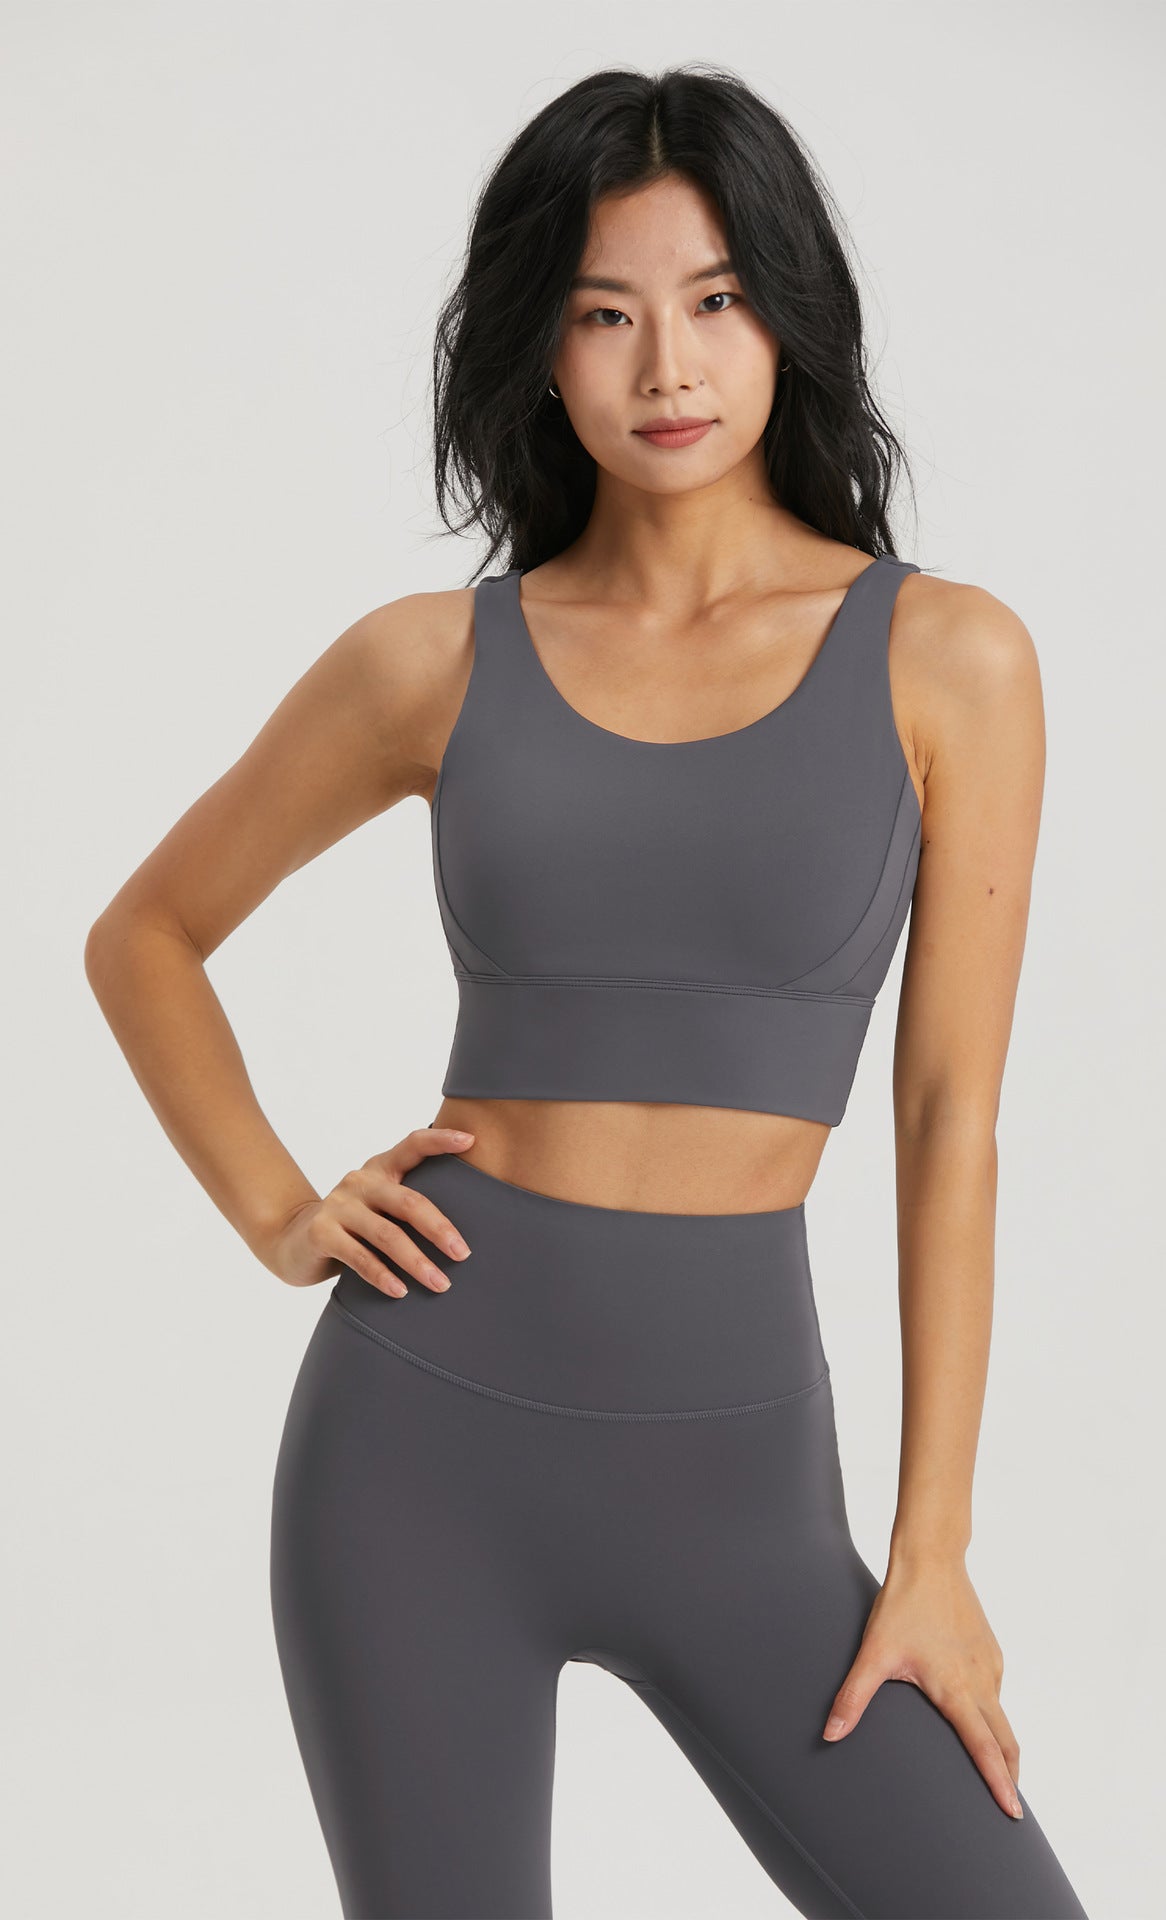 2023 fixed cup Lycra sports underwear gathered U-shaped yoga bra fitness vest